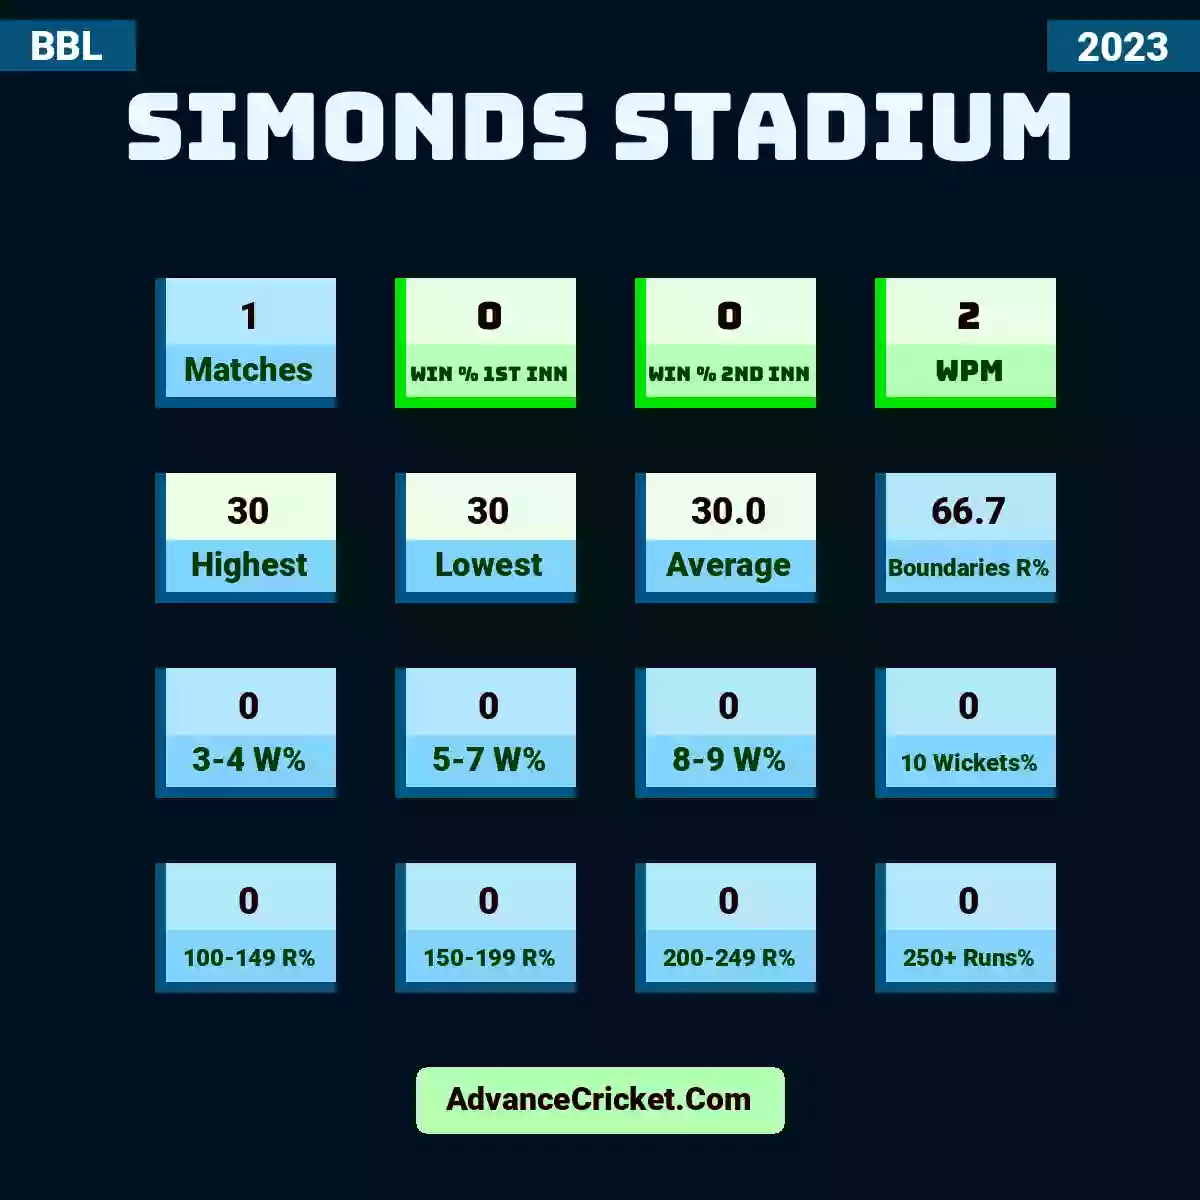 Image showing Simonds Stadium with Matches: 1, Win % 1st Inn: 0, Win % 2nd Inn: 0, WPM: 2, Highest: 30, Lowest: 30, Average: 30.0, Boundaries R%: 66.7, 3-4 W%: 0, 5-7 W%: 0, 8-9 W%: 0, 10 Wickets%: 0, 100-149 R%: 0, 150-199 R%: 0, 200-249 R%: 0, 250+ Runs%: 0.